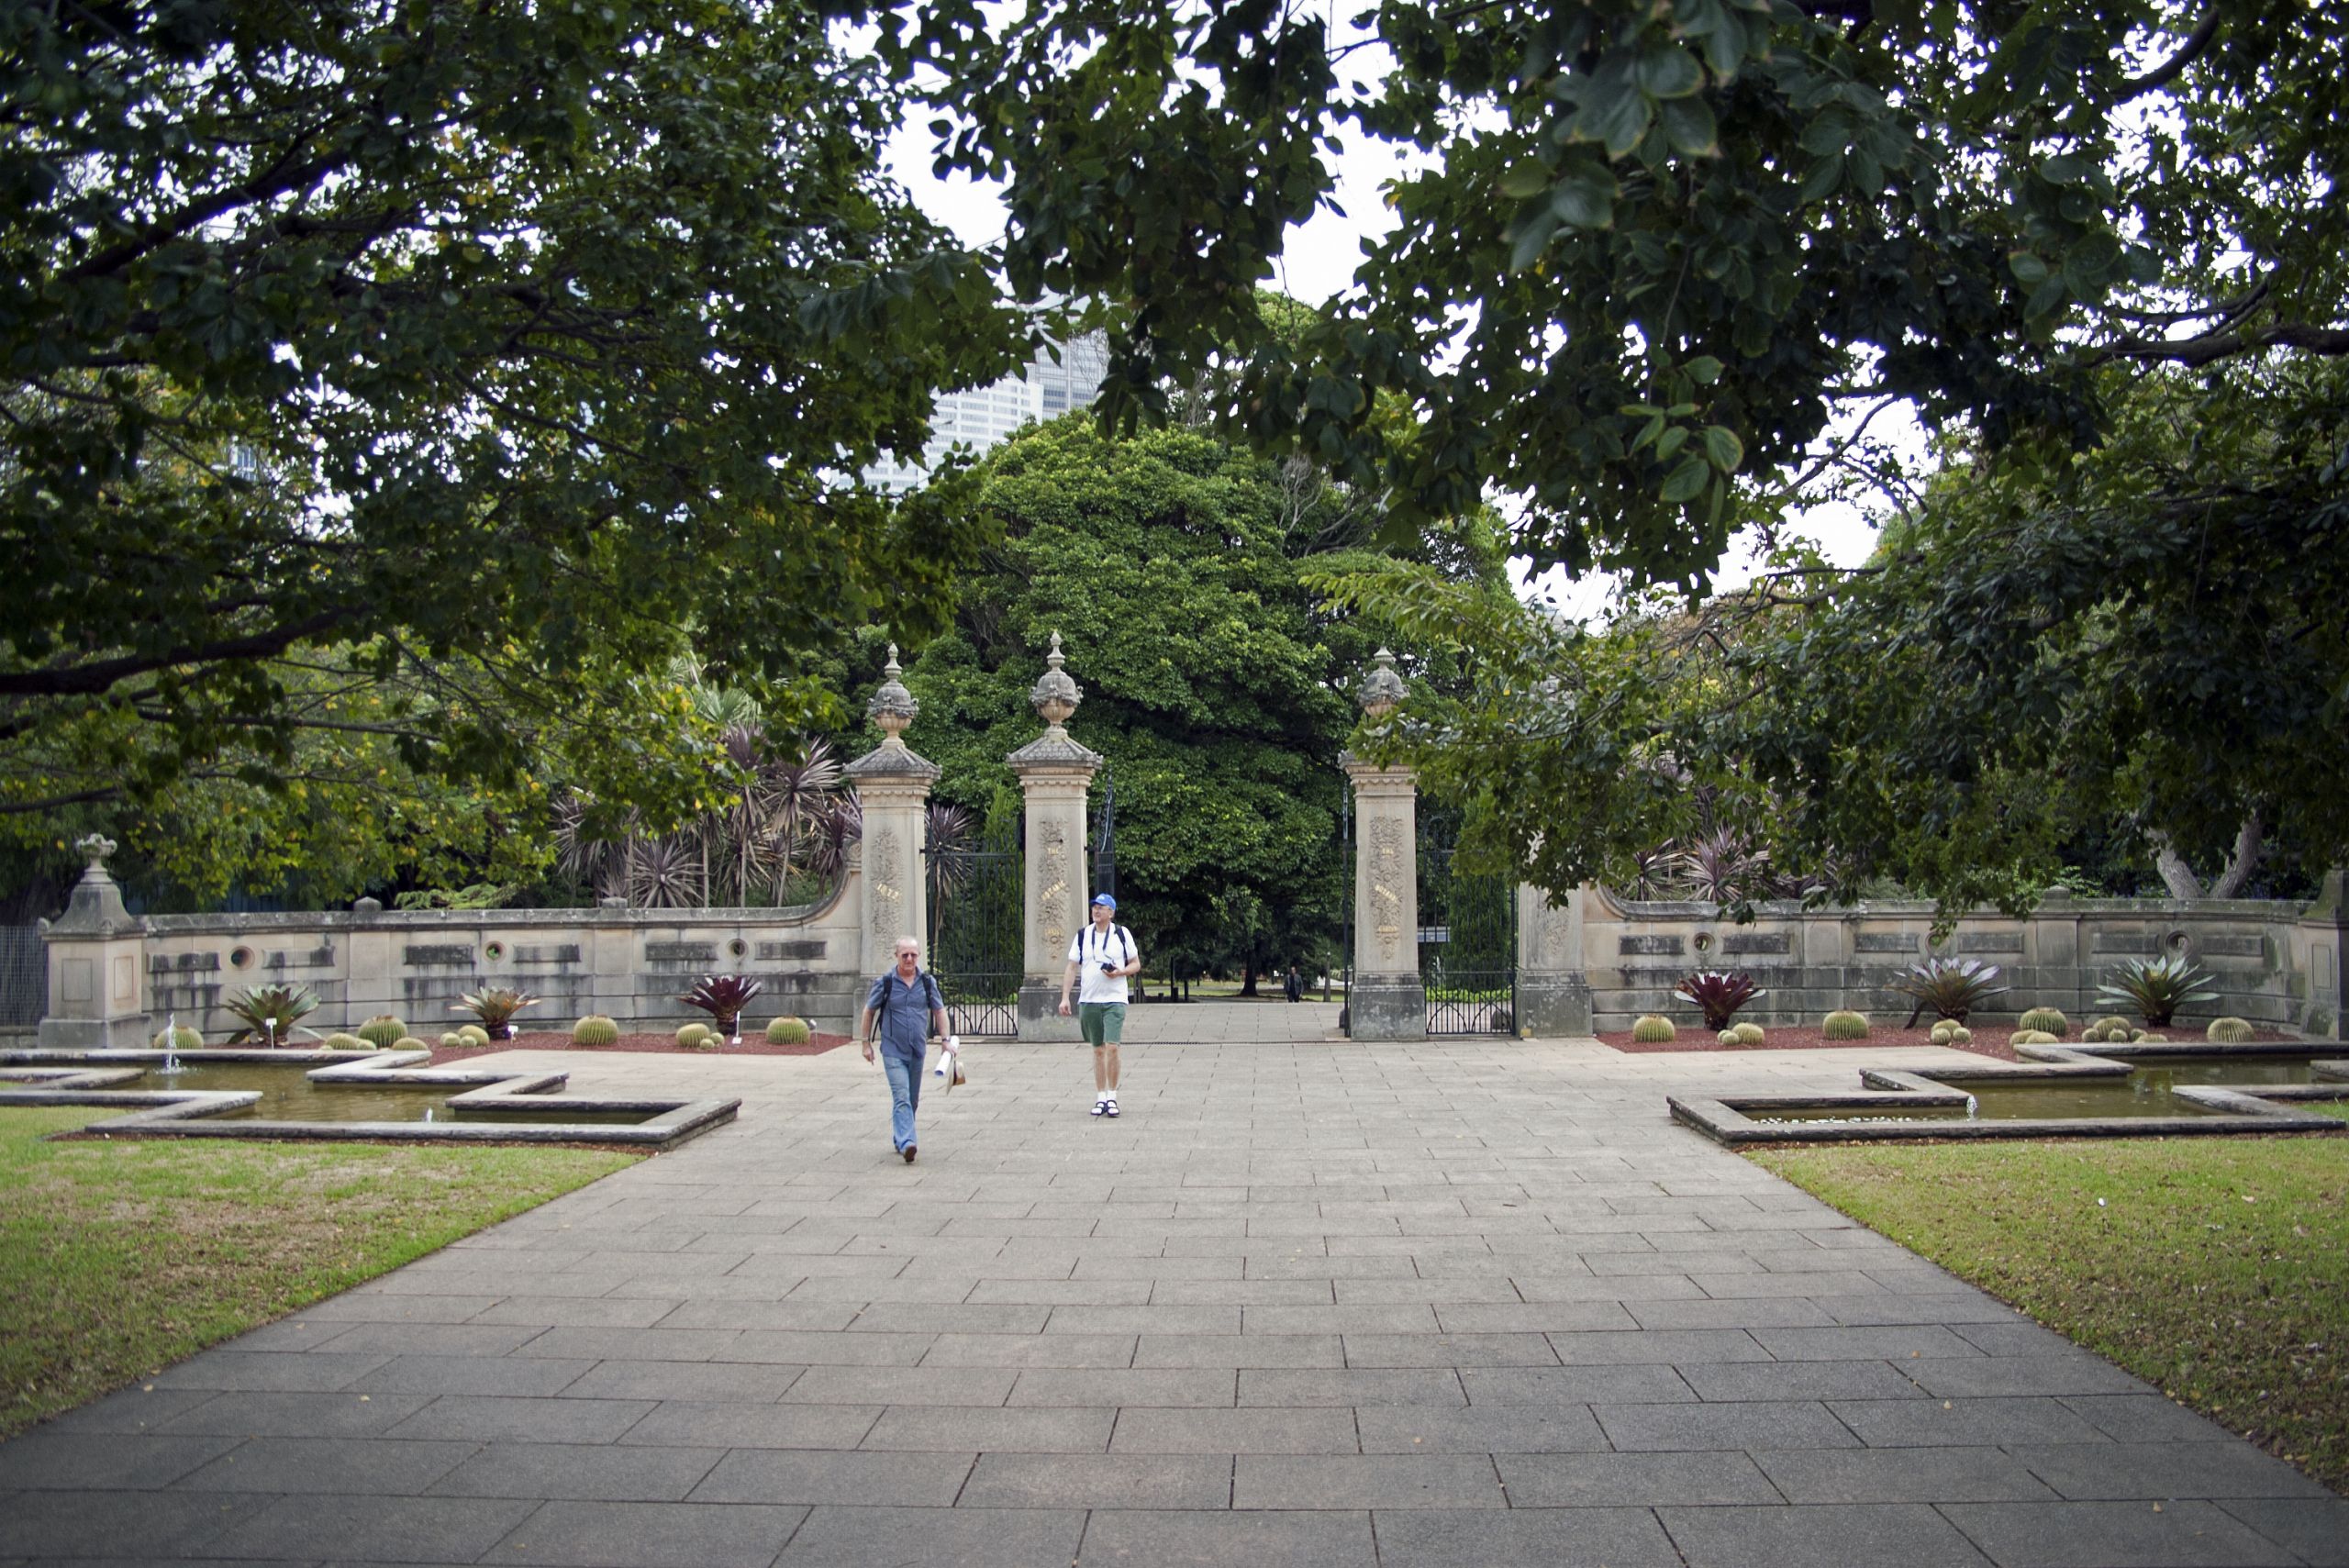 Gates at Royal Botanic Gardens viewed from Art Gallery Road